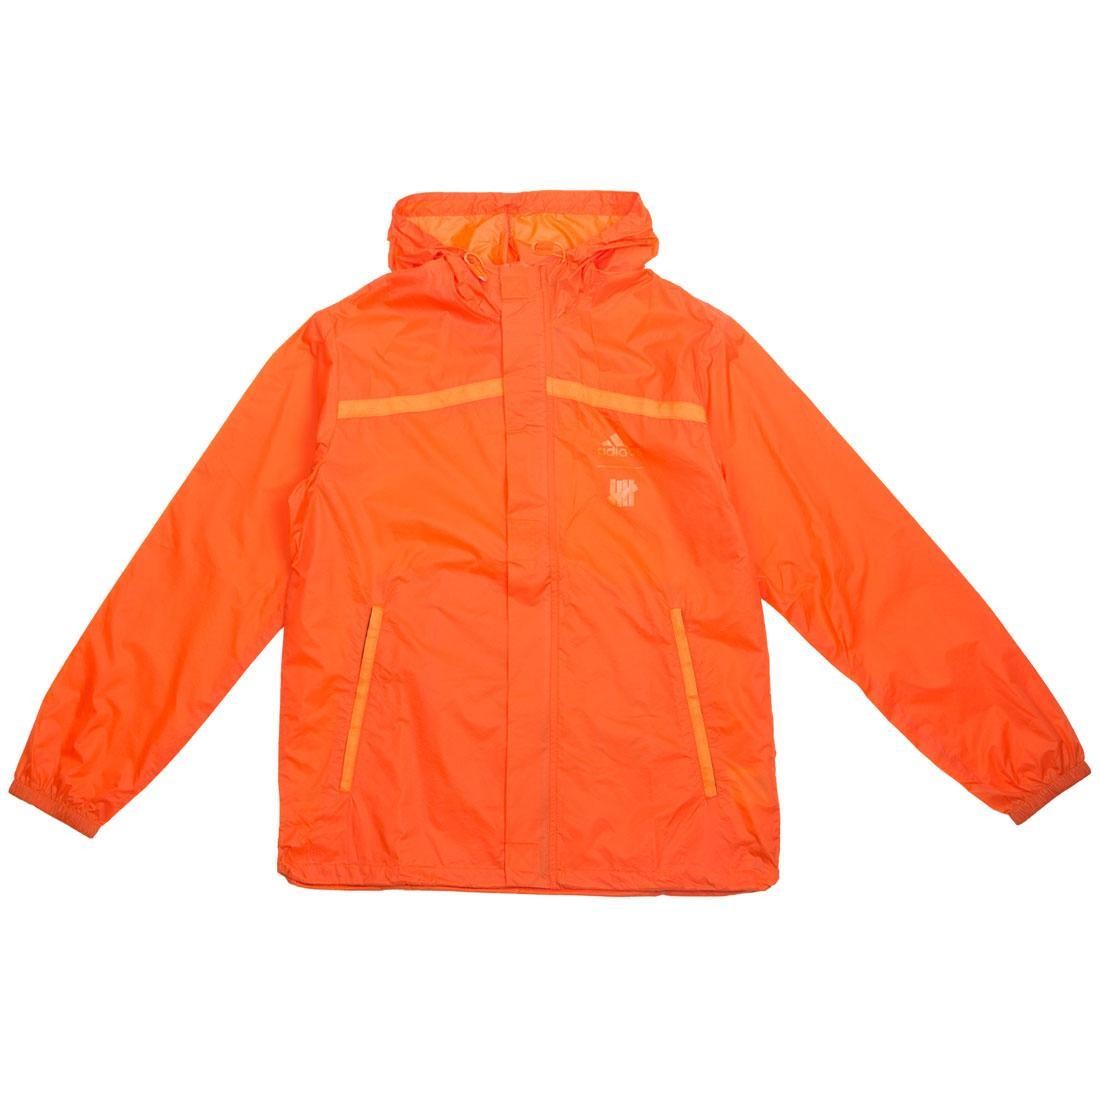 orange adidas jacket mens